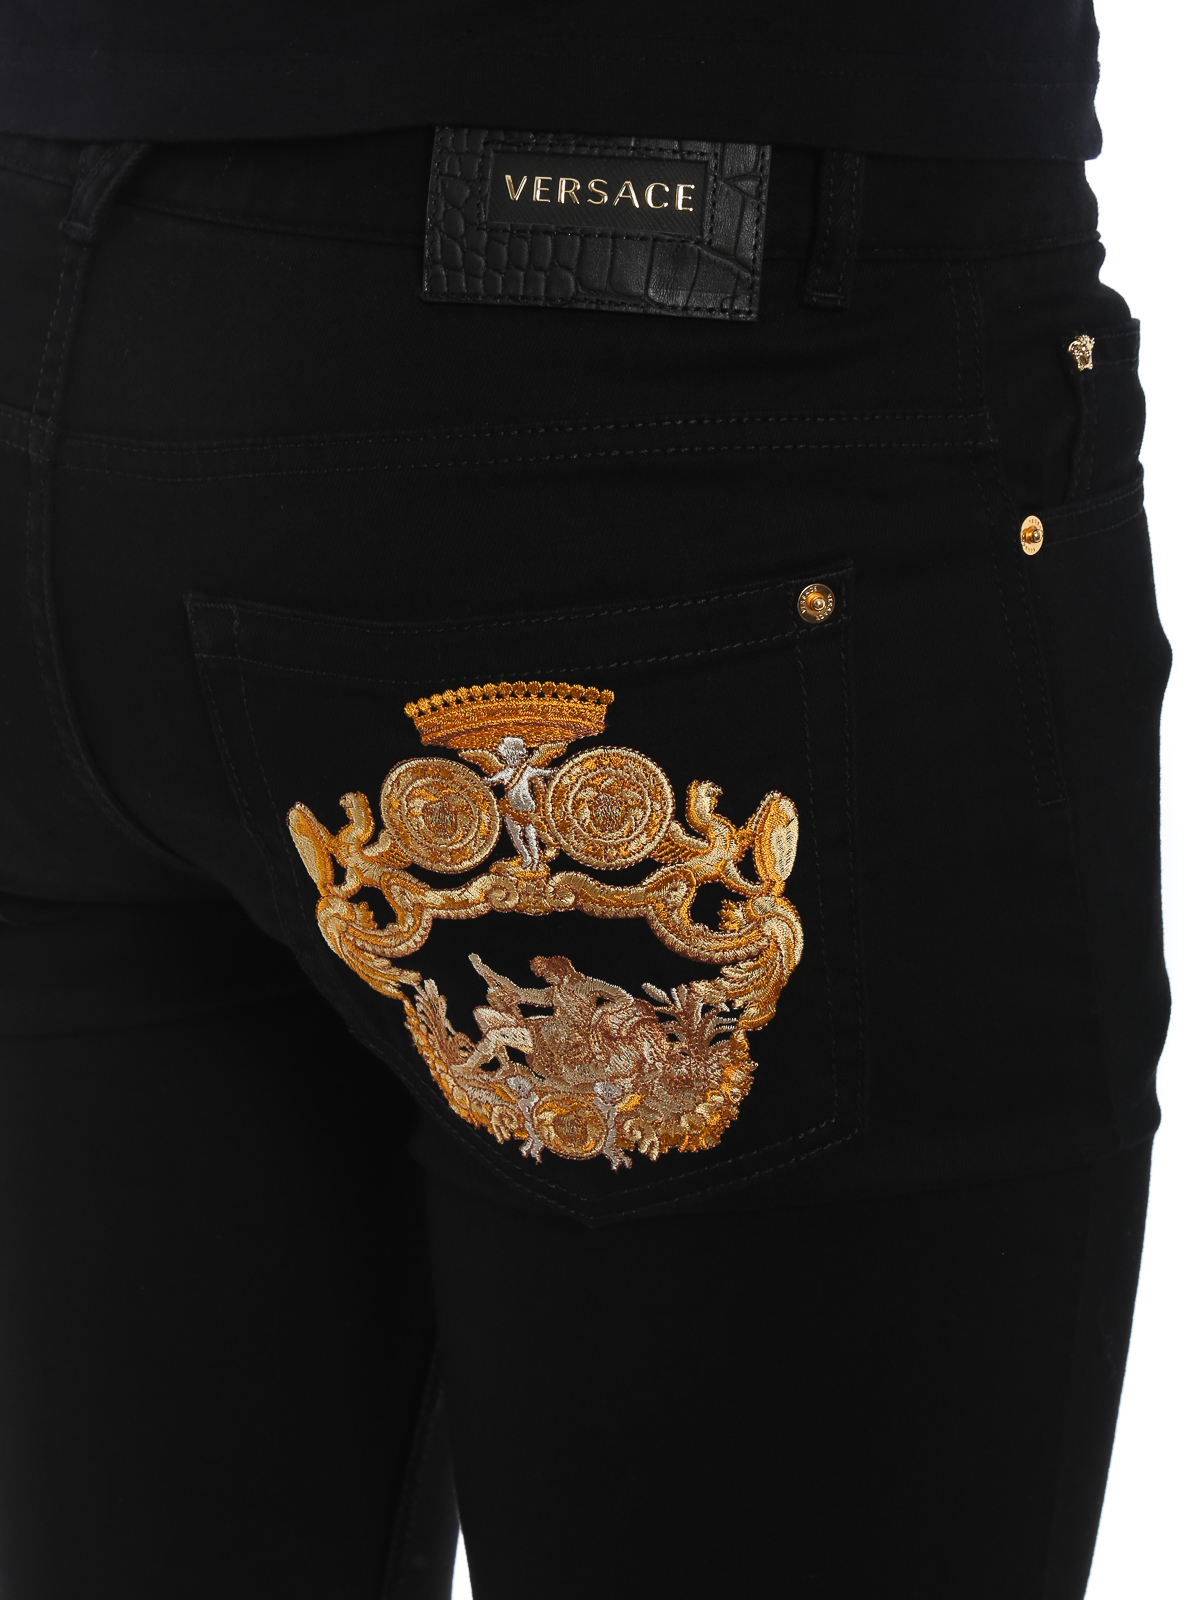 Eenheid Astrolabium Nest Straight leg jeans Versace - Baroque embroidery black denim jeans -  A80305A226382A813